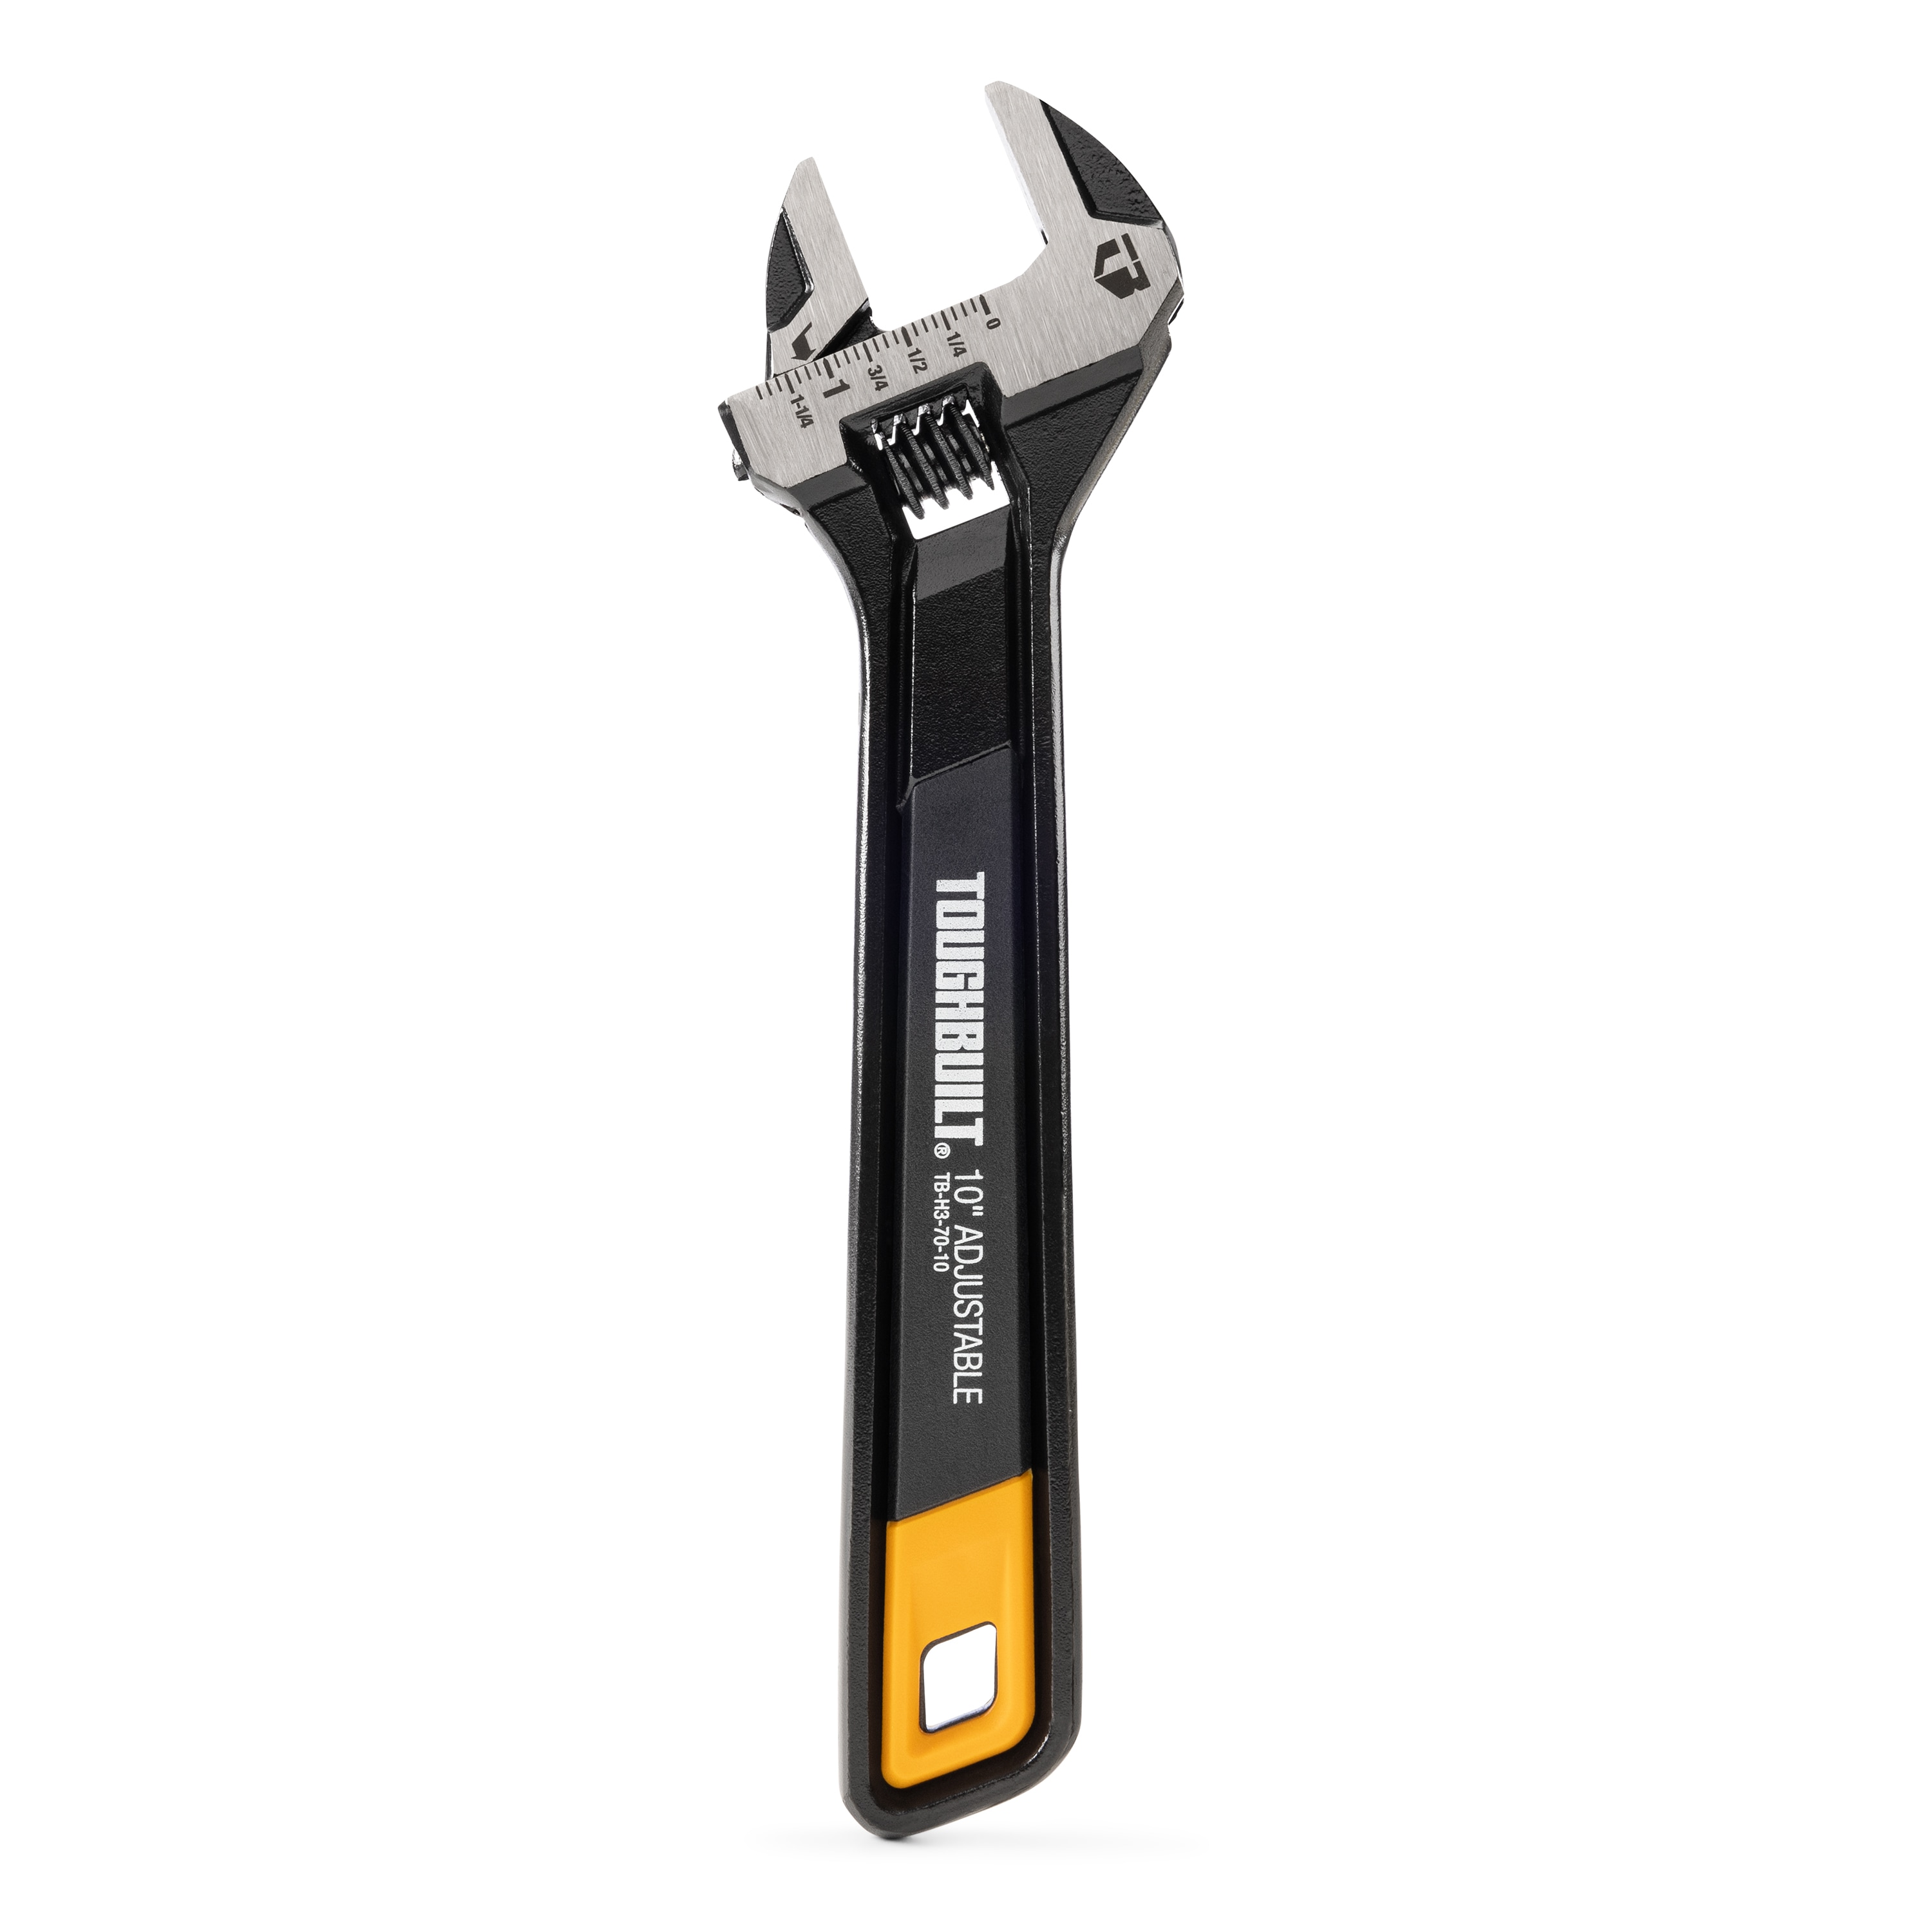 TOUGHBUILT 10-in Chrome Vanadium Steel Adjustable Wrench in the 